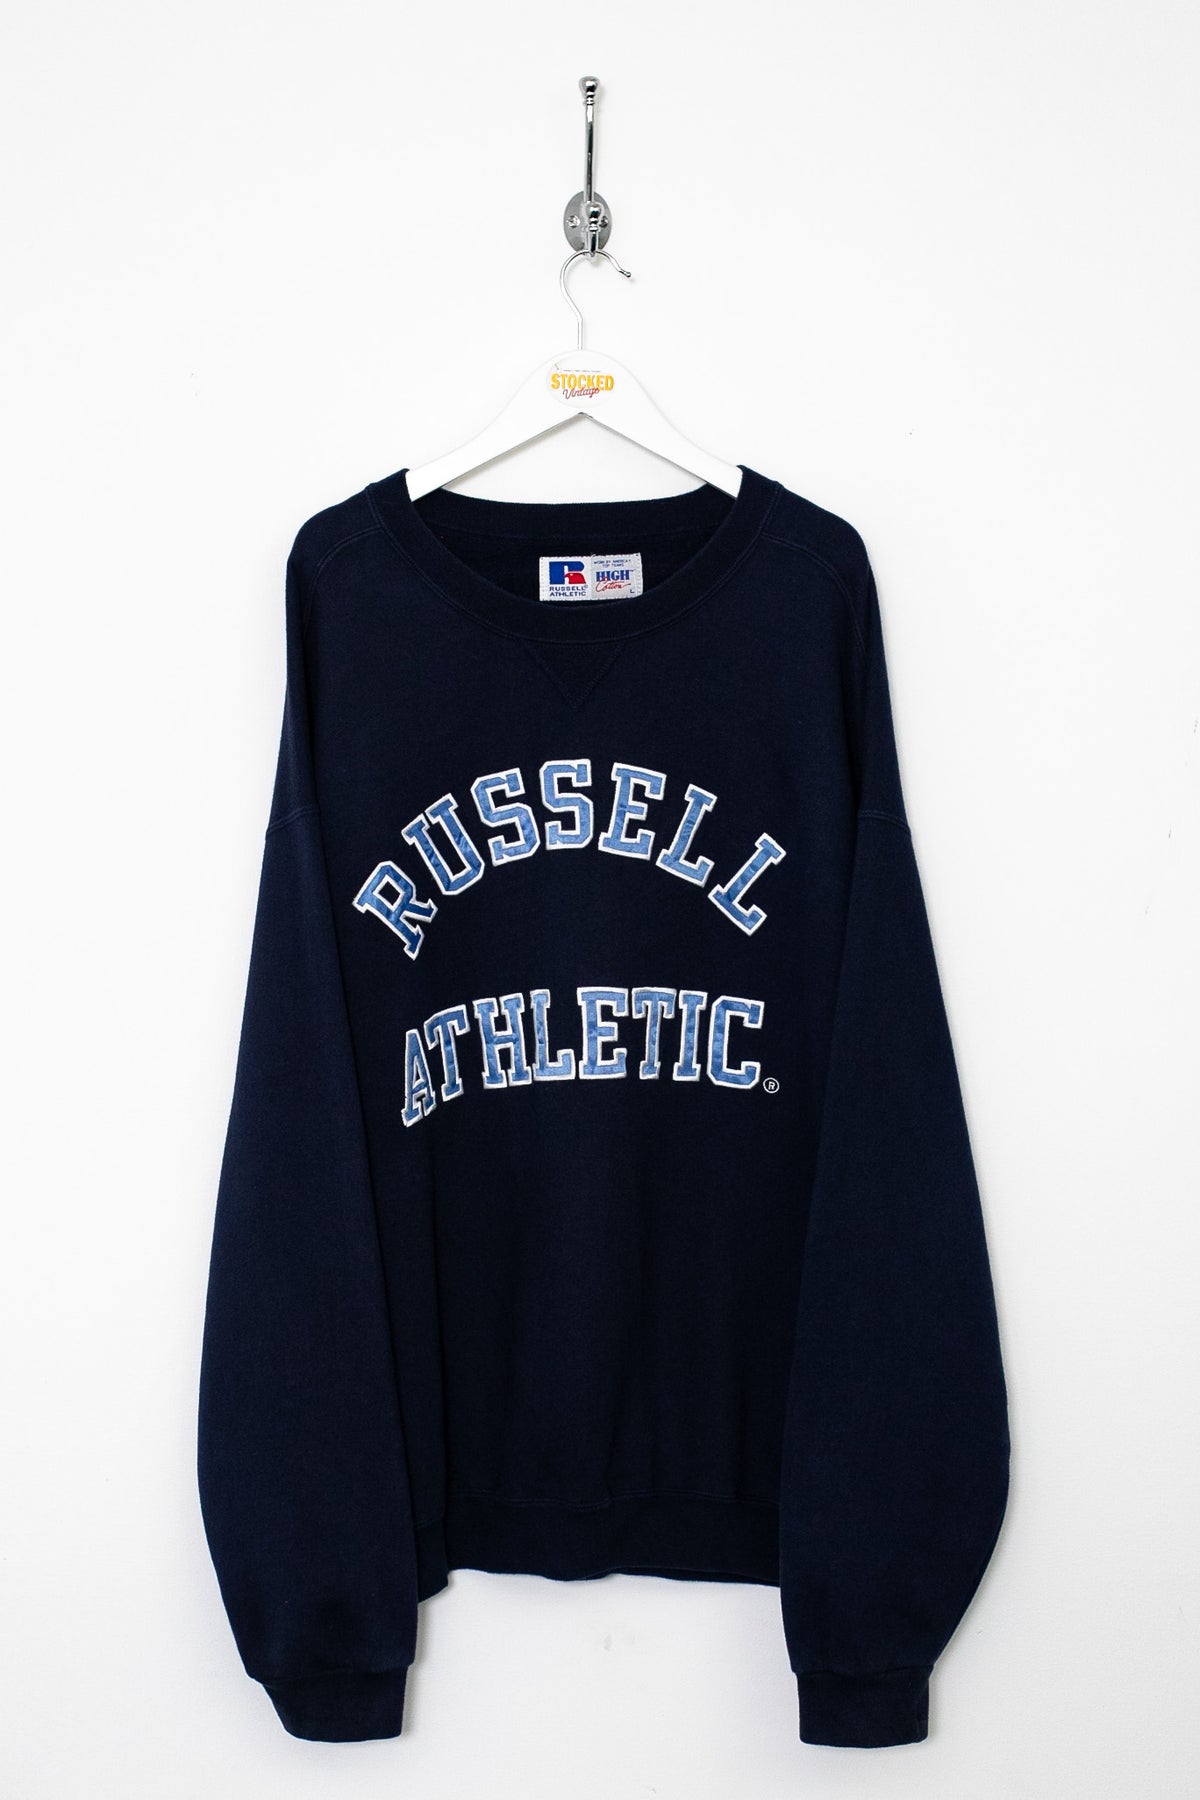 90s Russell Athletic Sweatshirt (XL)